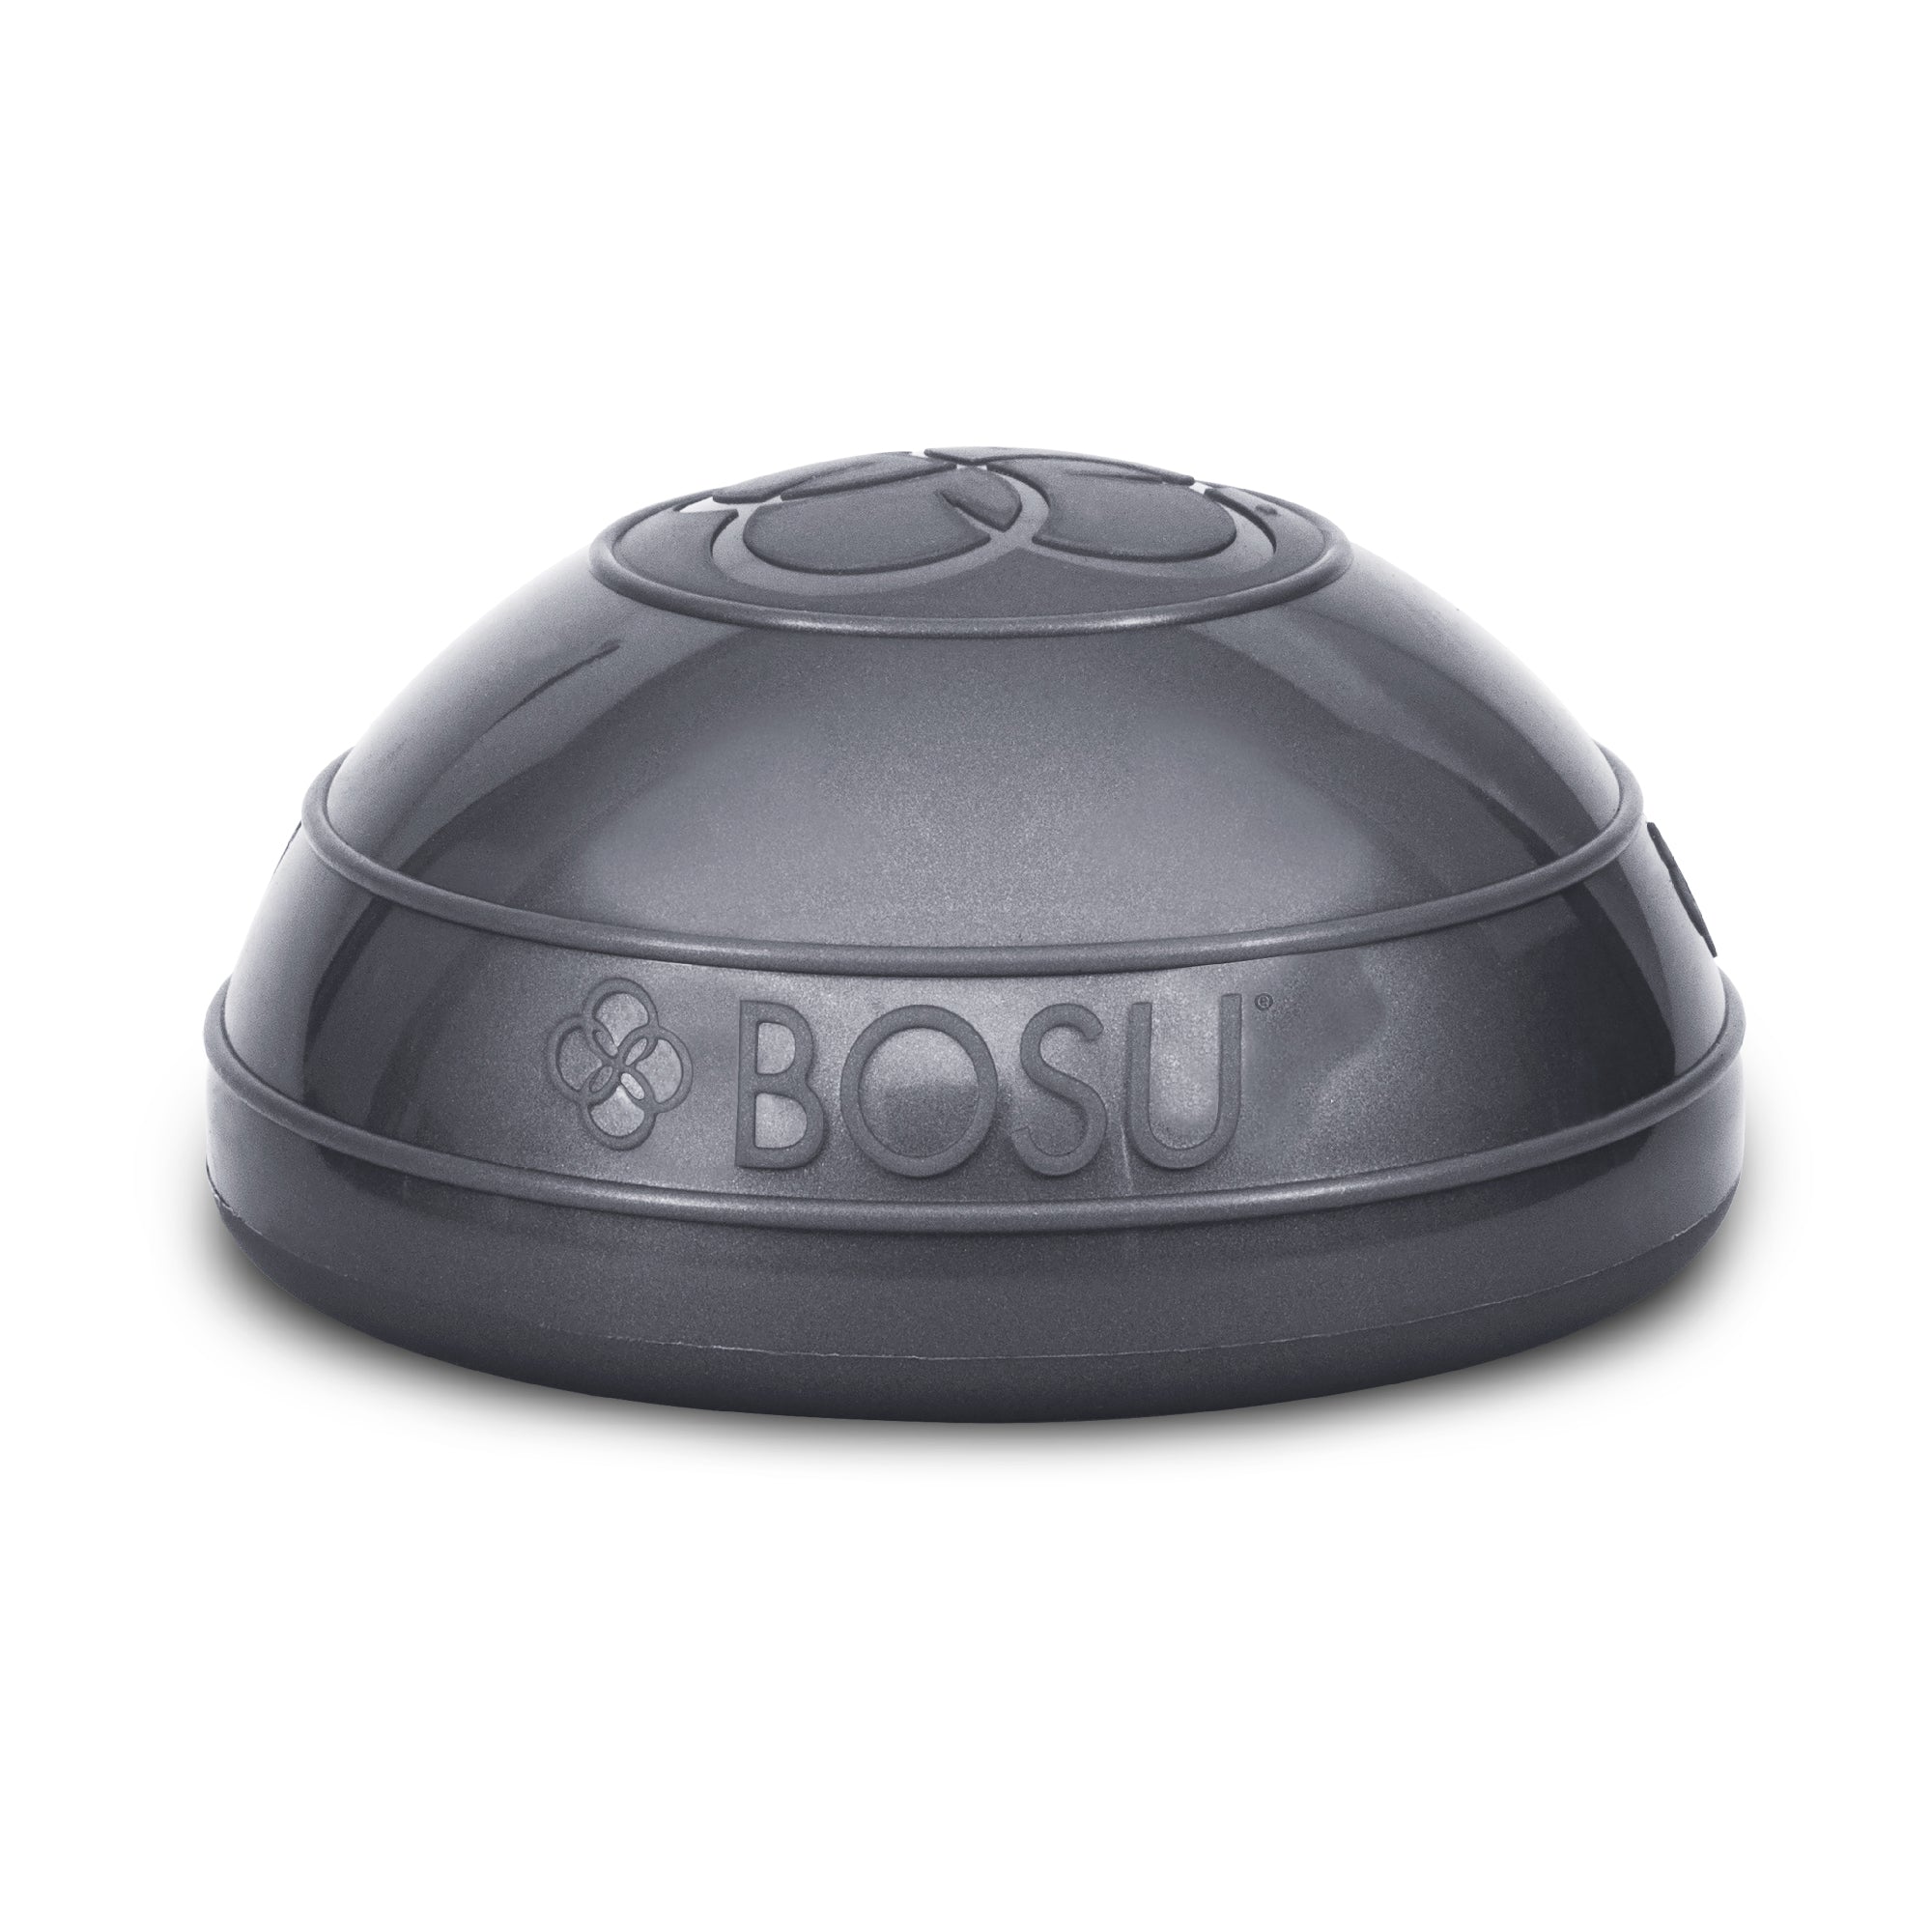 BOSU® Balance Pods(6.5 in) - 4 pack